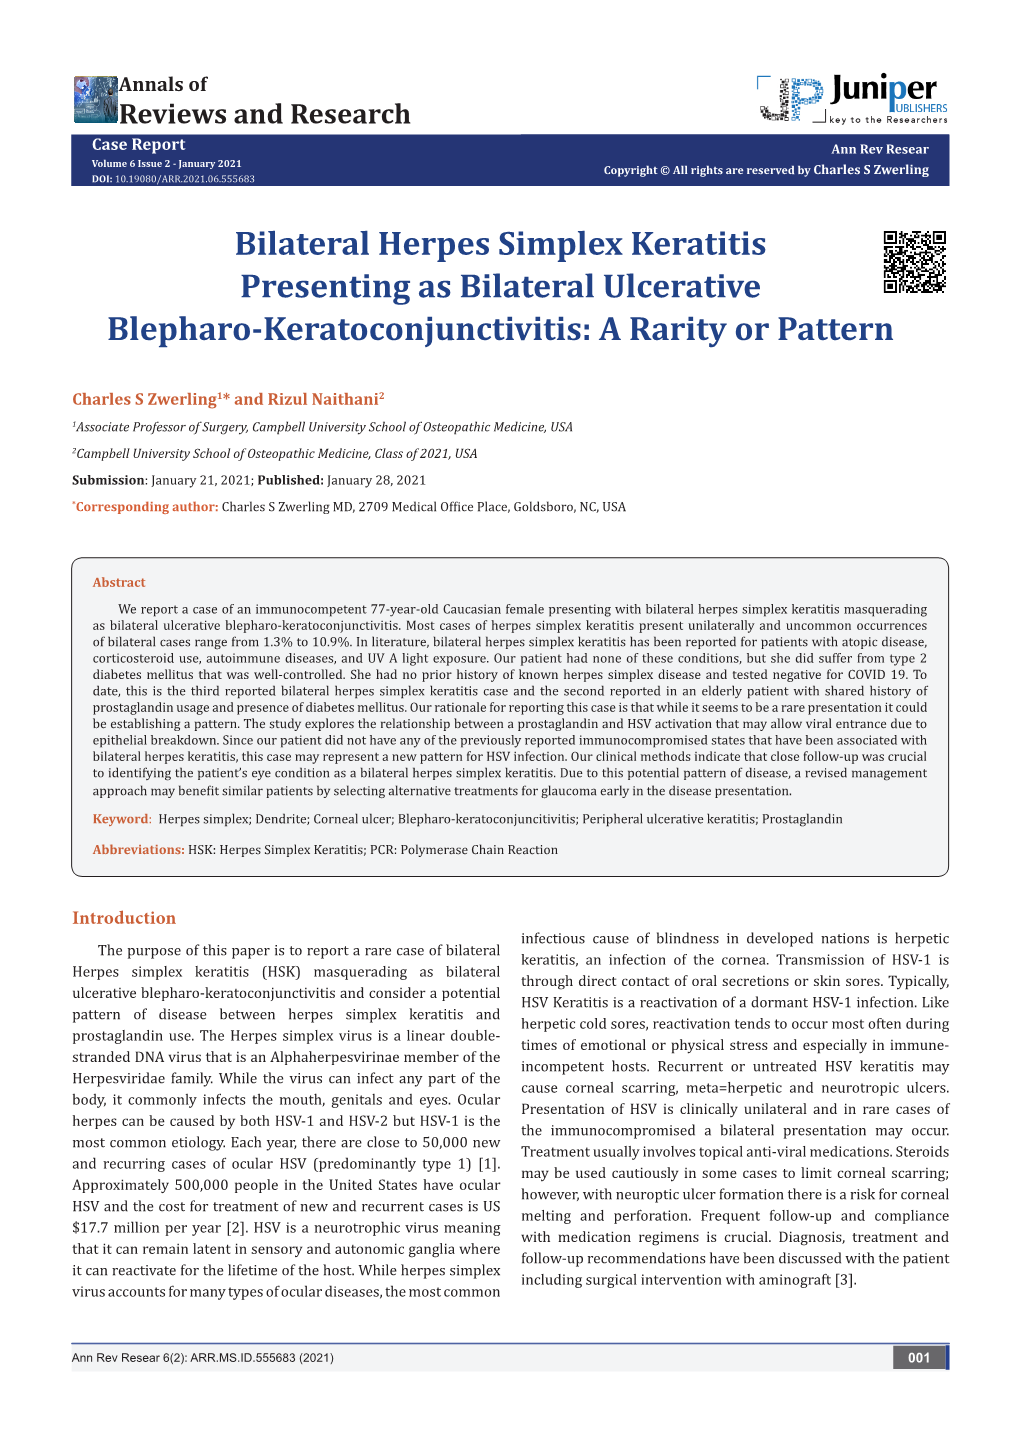 Bilateral Herpes Simplex Keratitis Presenting As Bilateral Ulcerative Blepharo-Keratoconjunctivitis: a Rarity Or Pattern